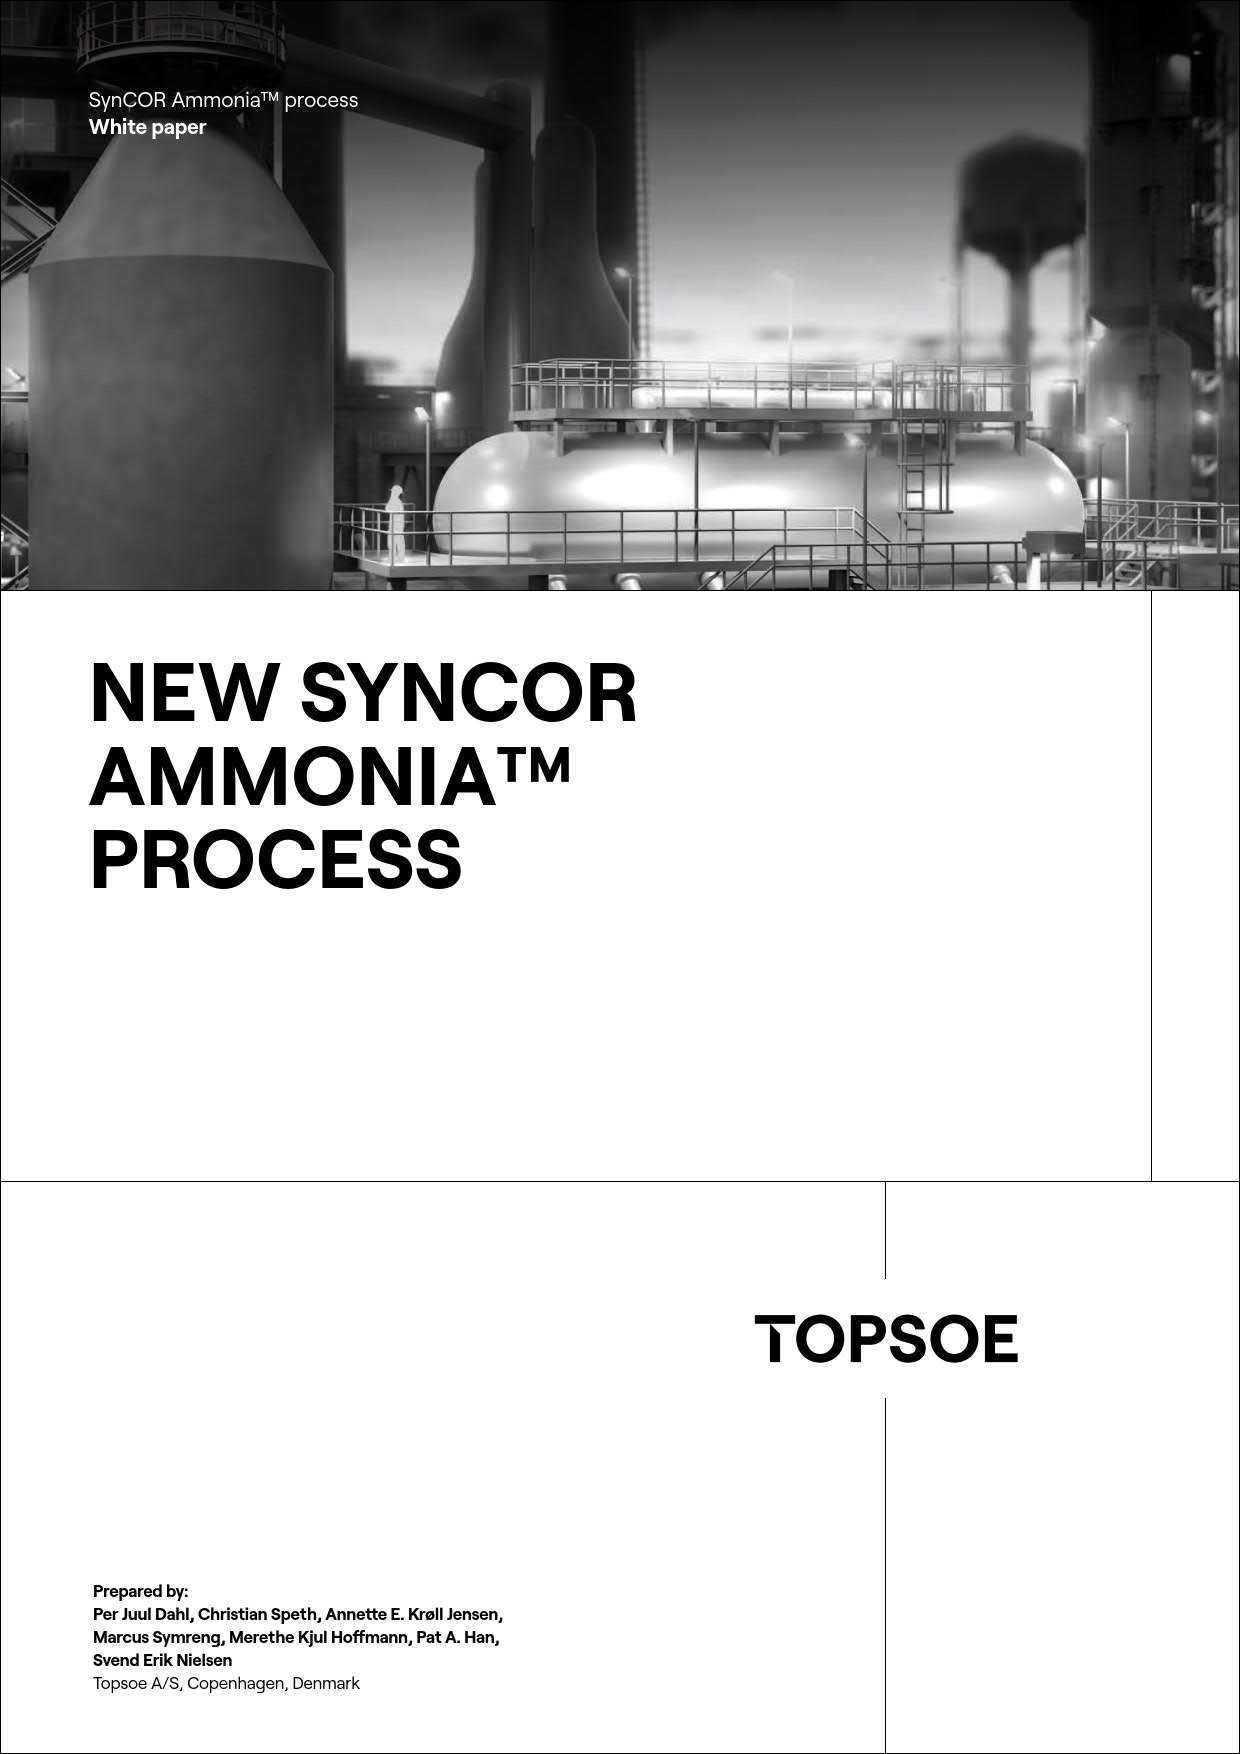 New SynCOR Ammonia™ process